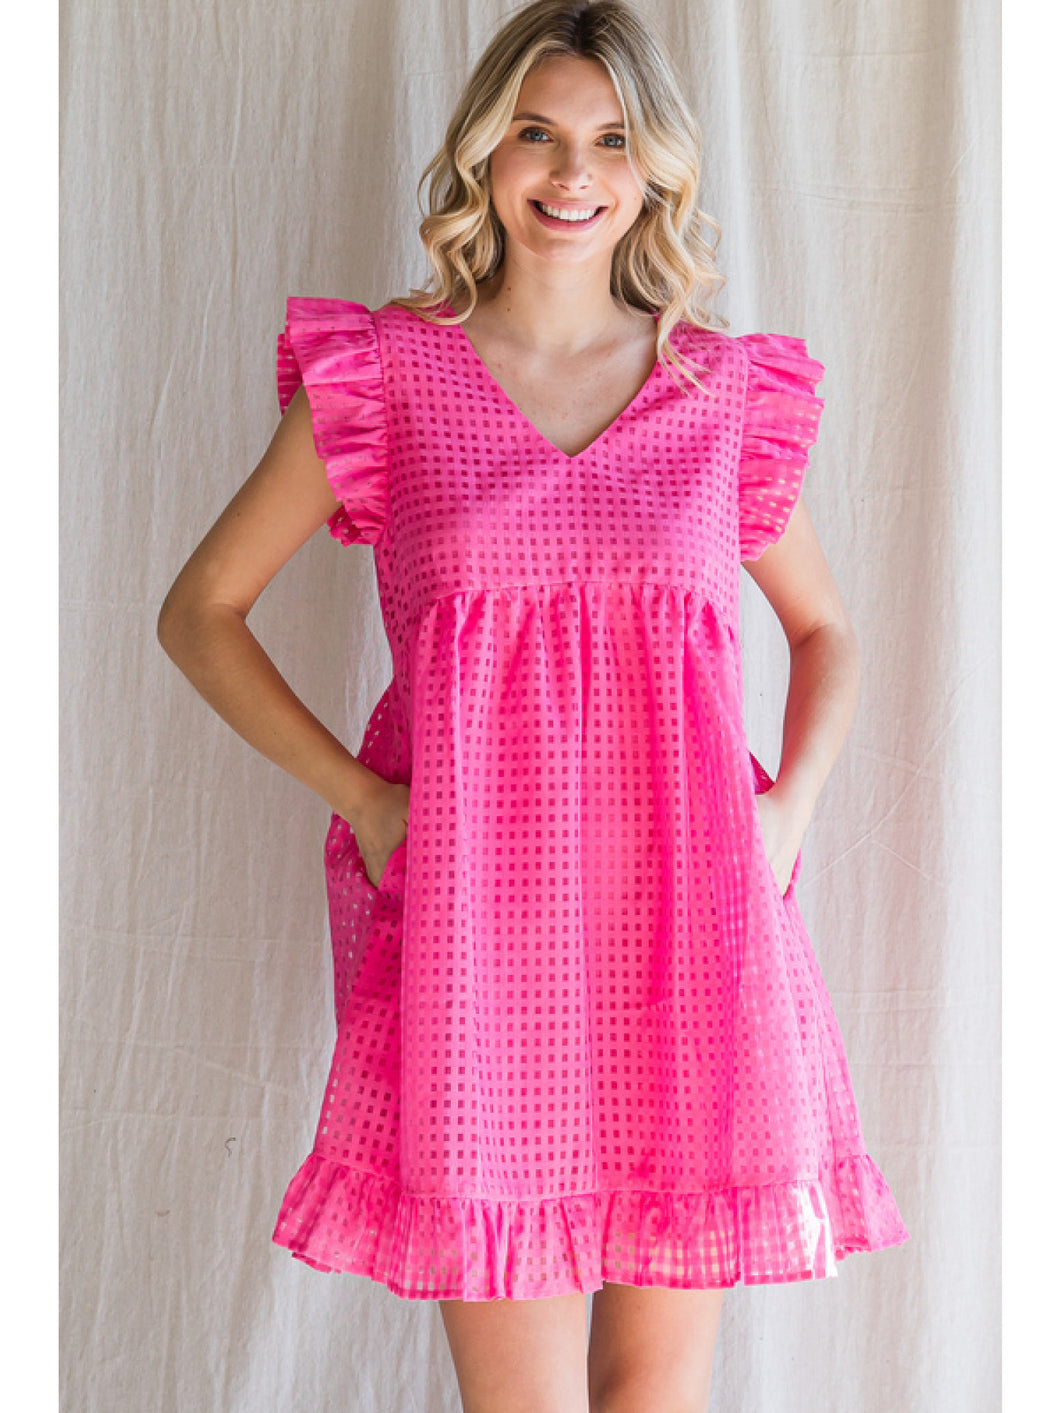 Hot Pink Babydoll Dress